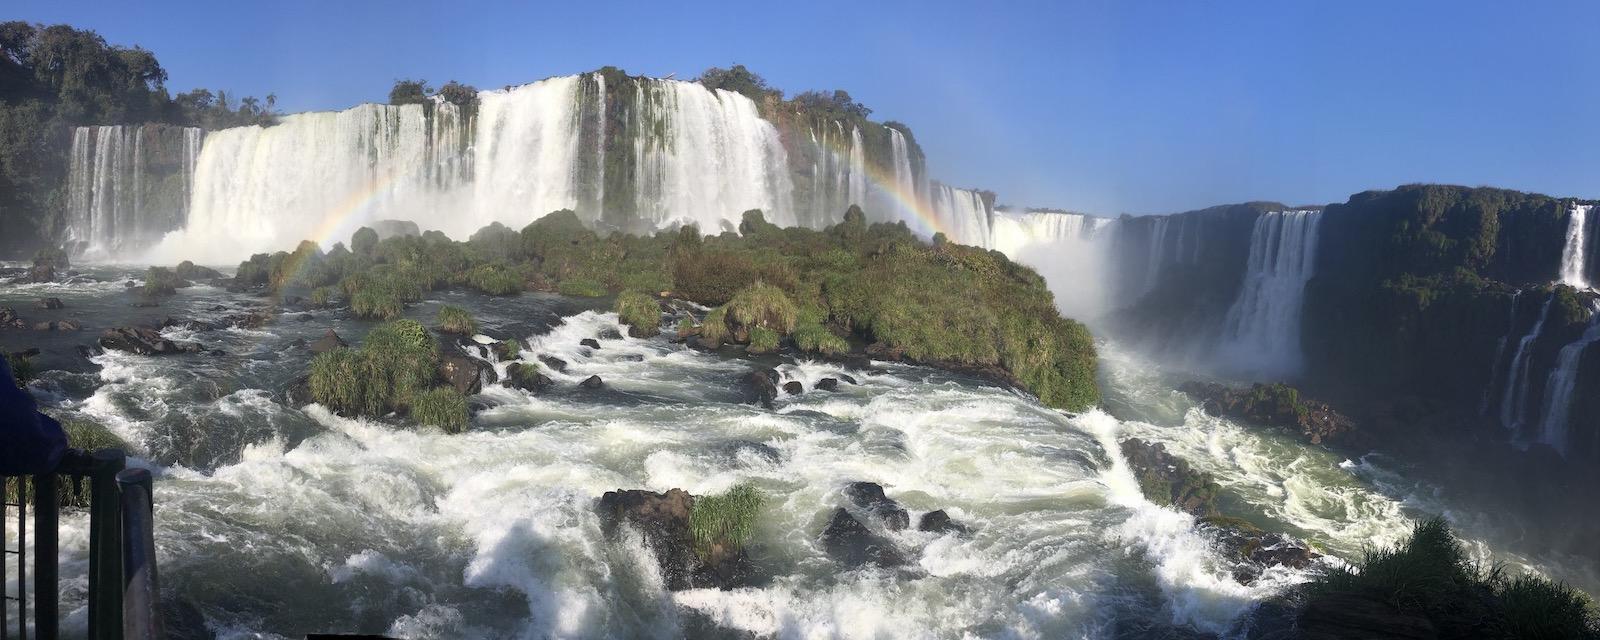 Argentina: Cascate dell'Iguazú